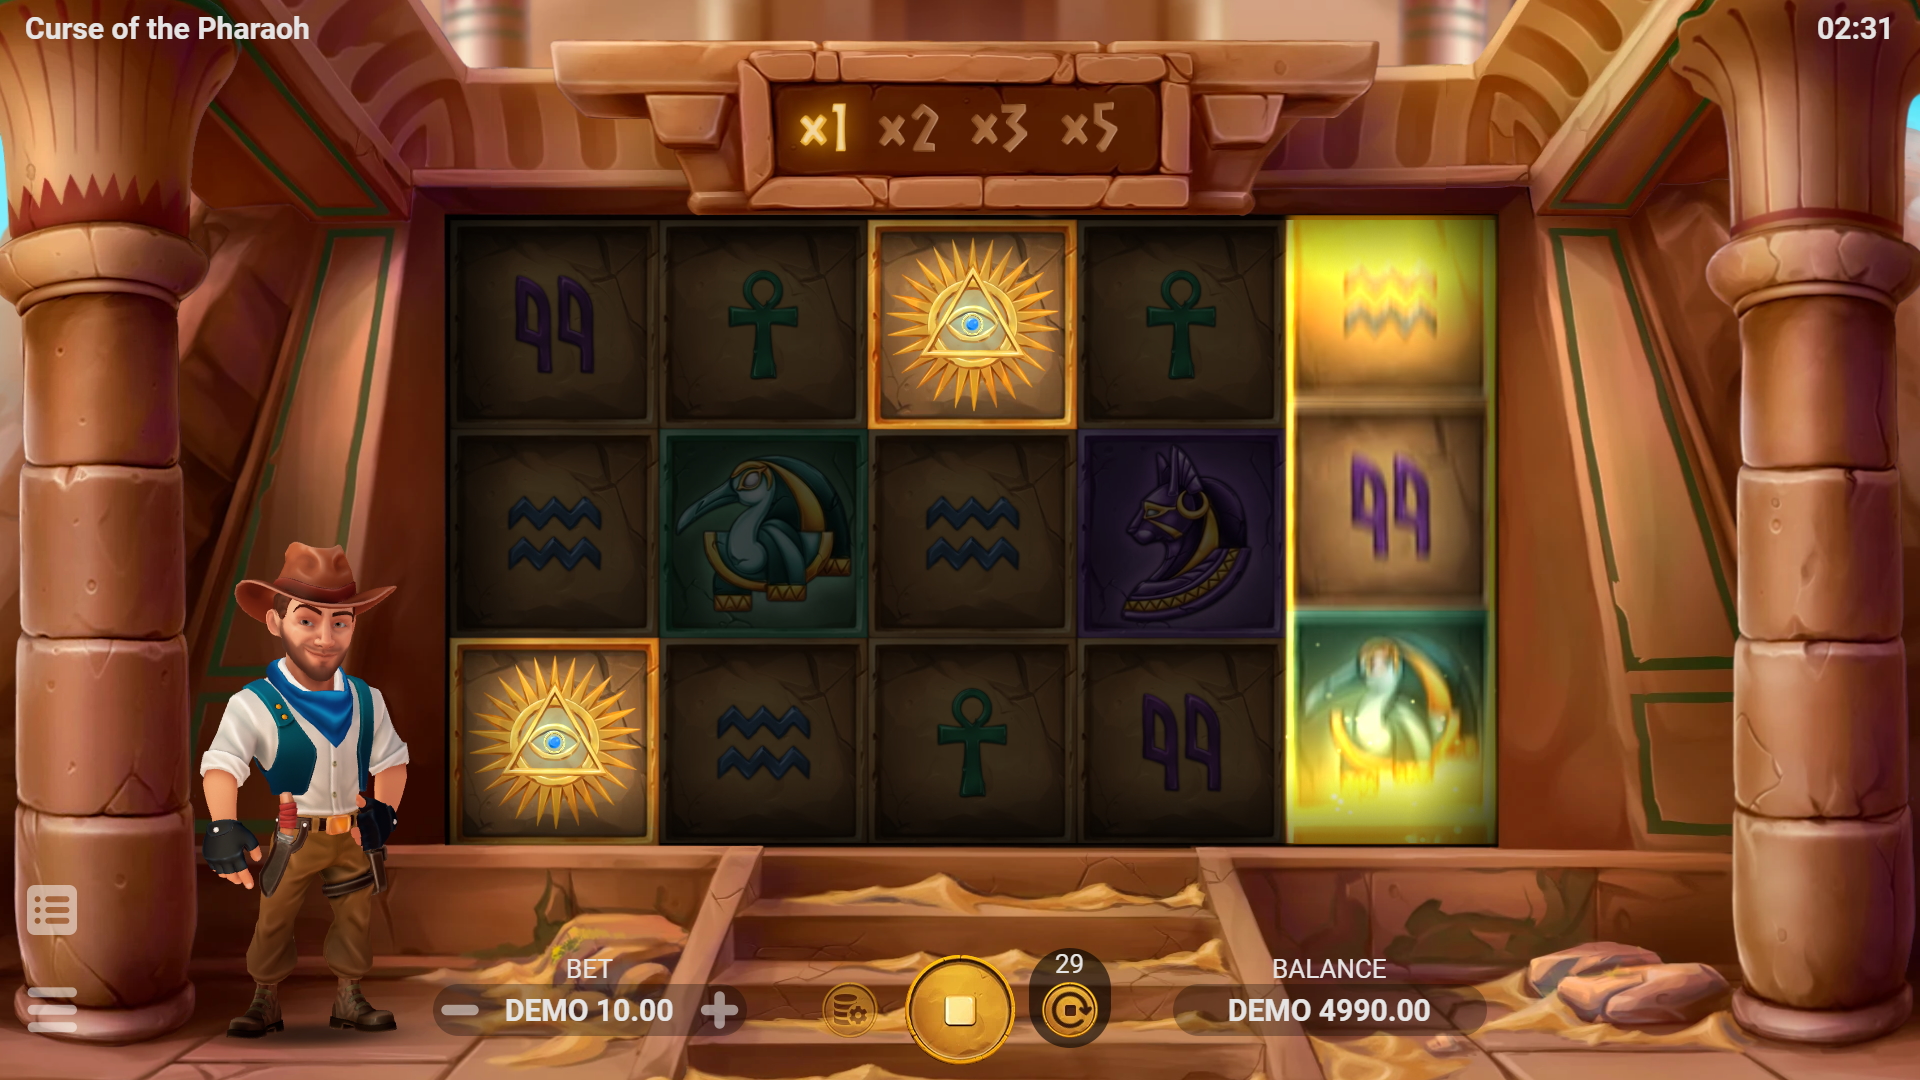 Curse of the Pharaoh 是一款老虎机游戏由合作伙伴 Evoplay 所提供 - 乐游国际GamingSoft